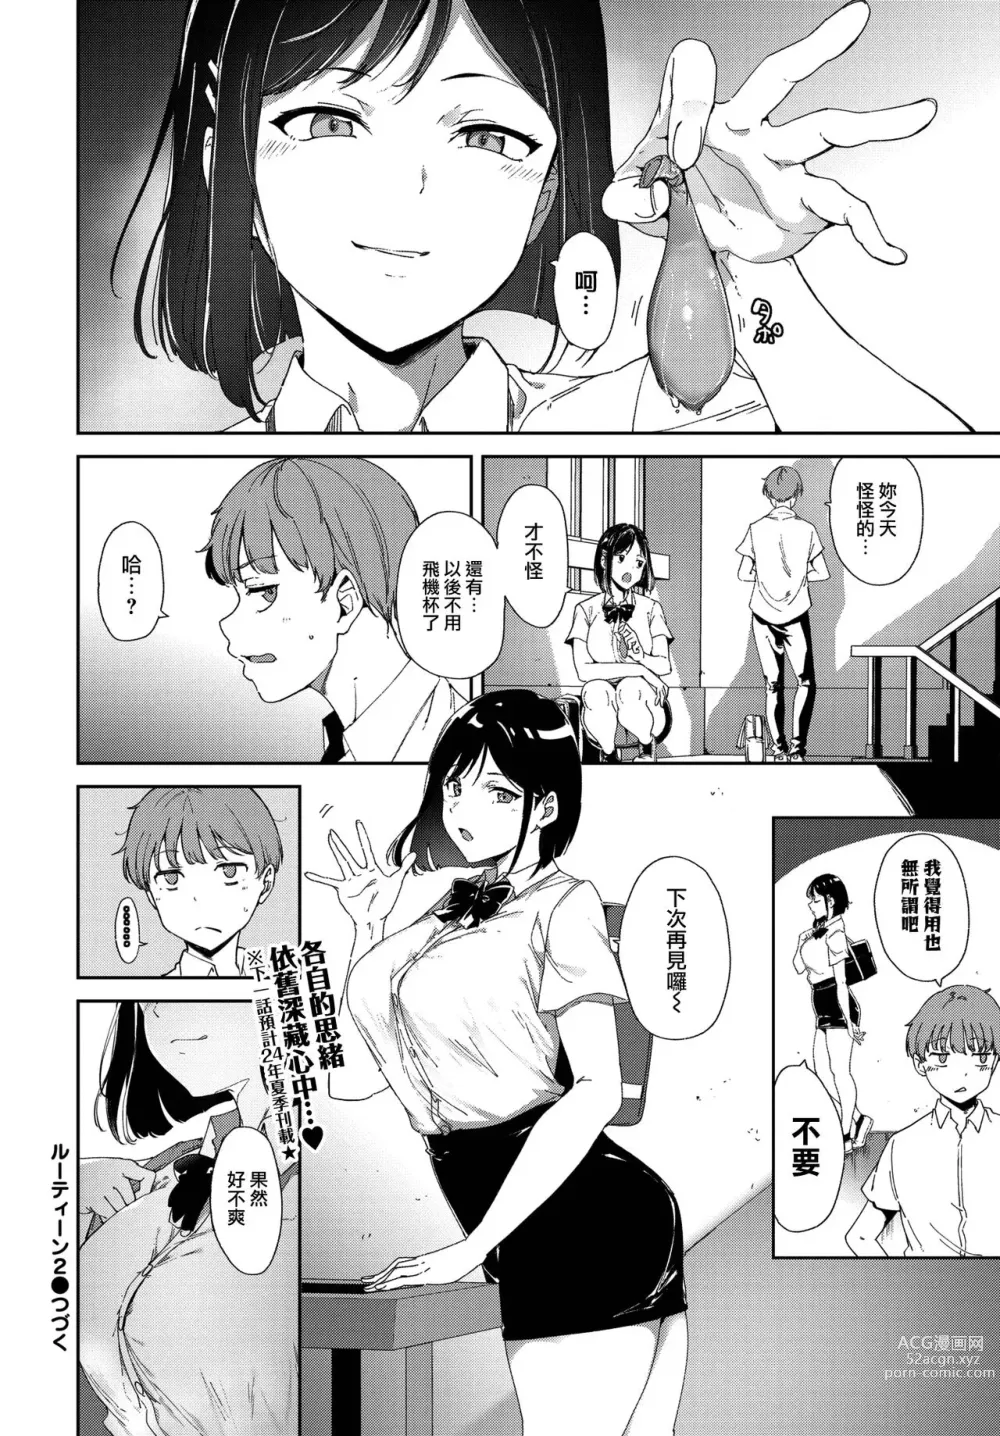 Page 17 of manga Routine 2